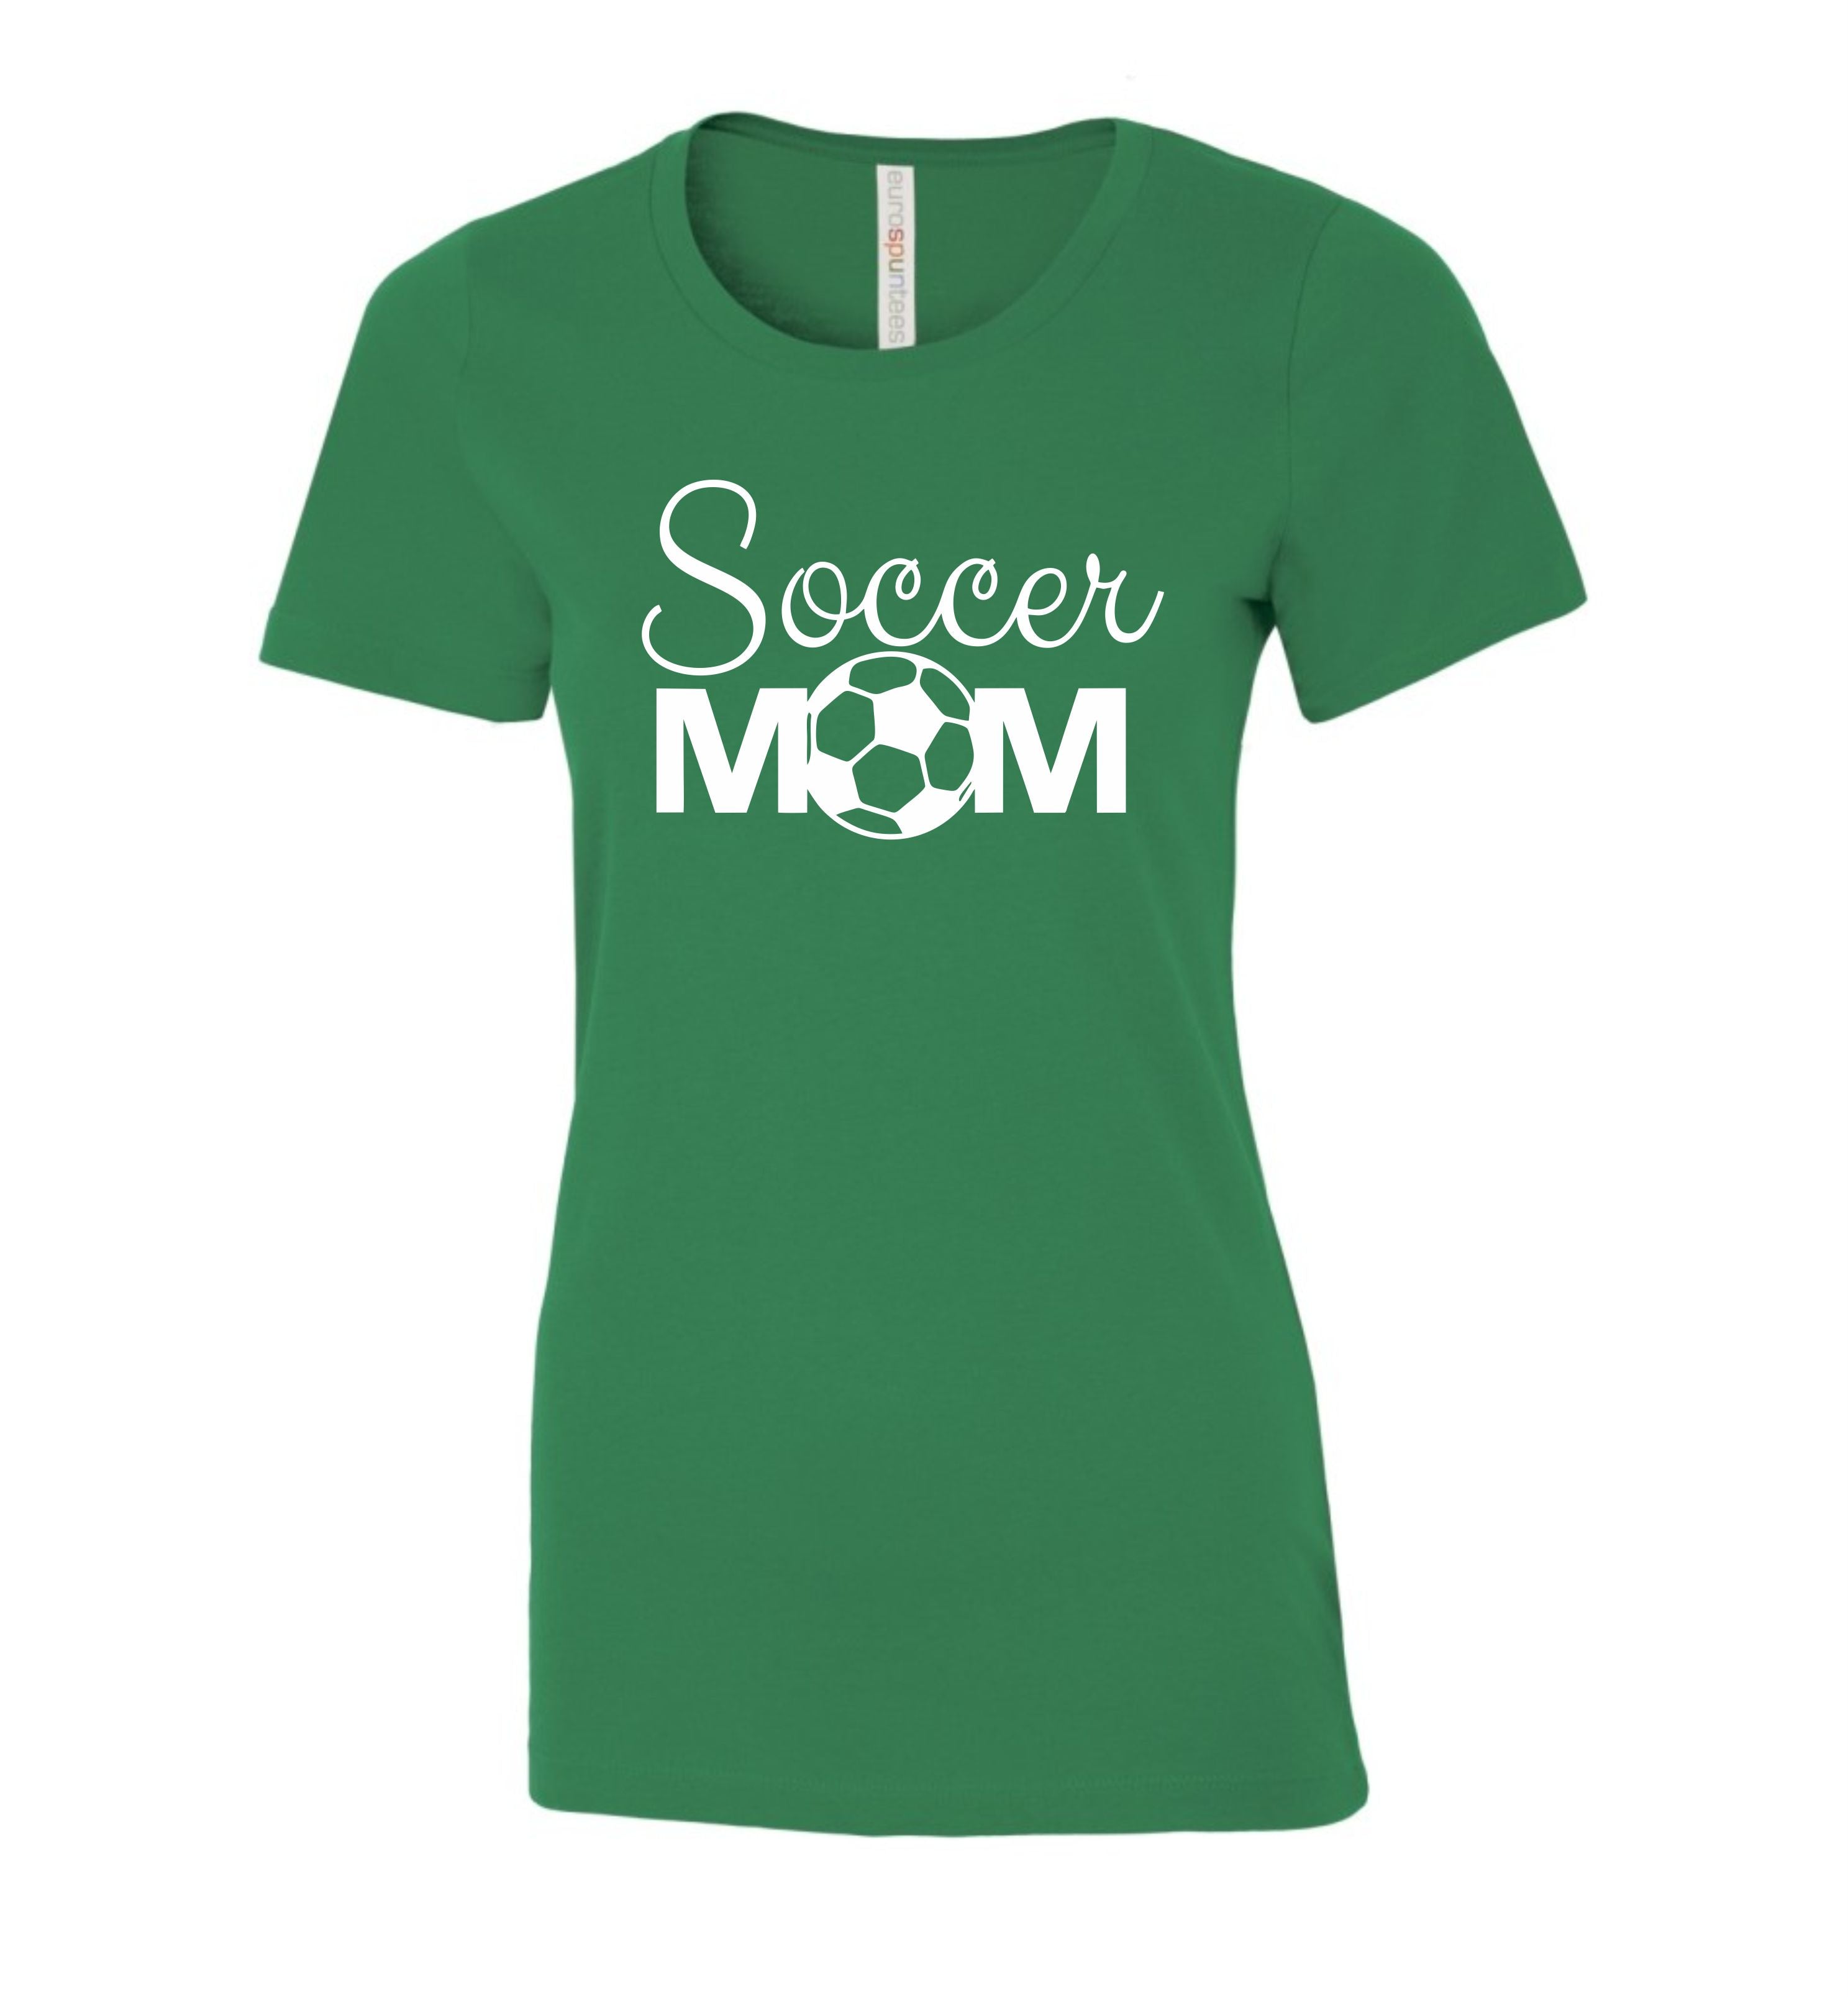 Soccer Mom Shirt (Womens Sizes)